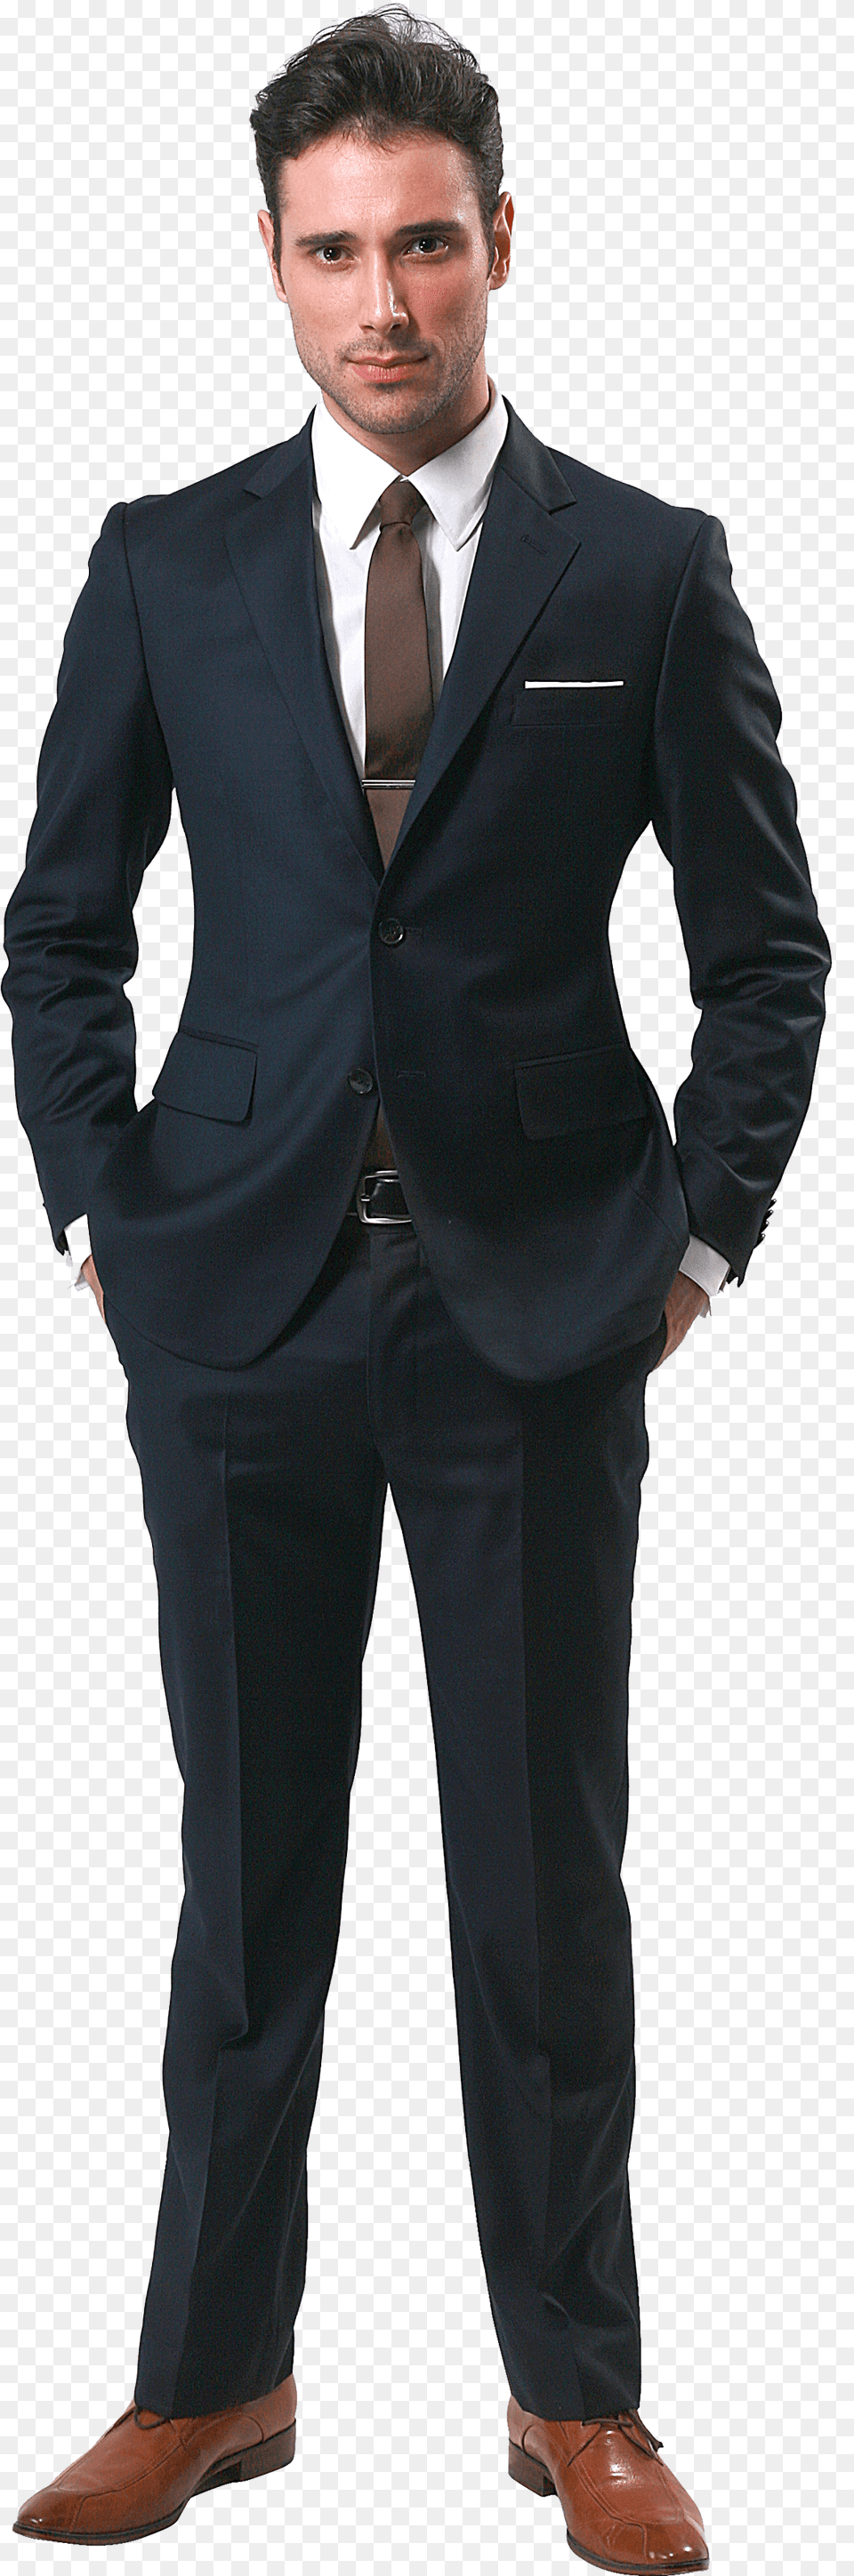 Business Man Download Transparent Background Businessman, Tuxedo, Clothing, Suit, Formal Wear Png Image